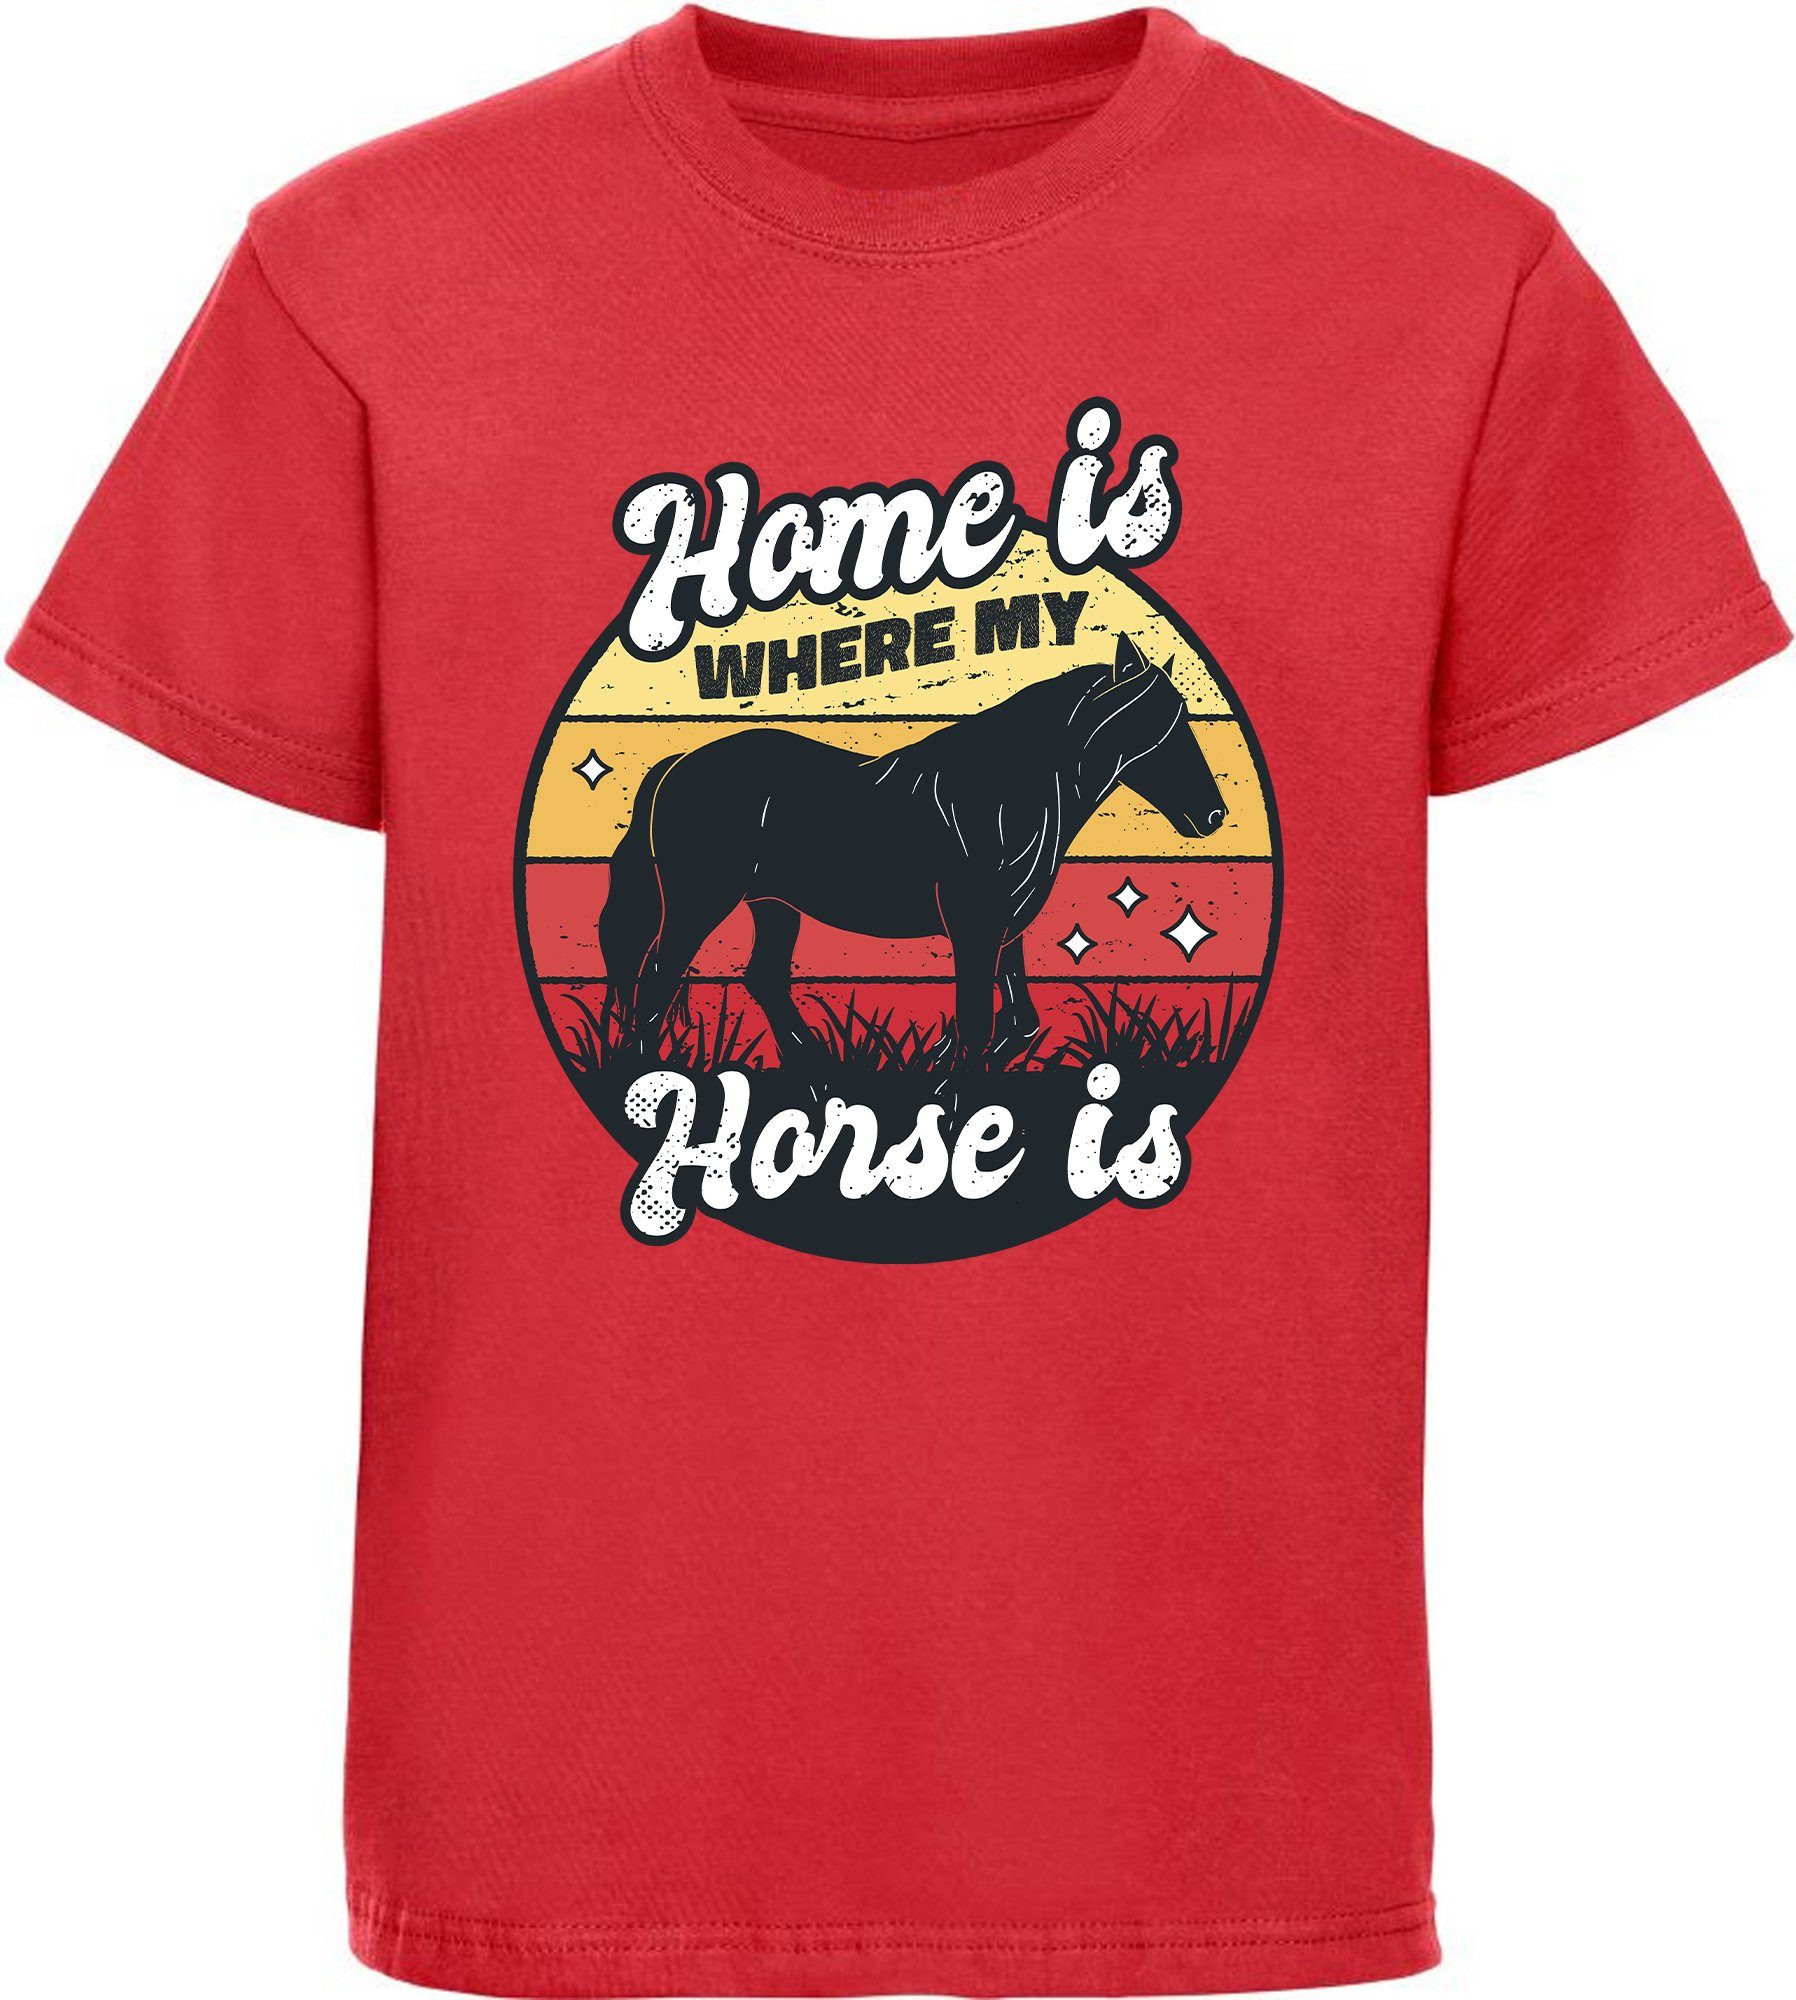 MyDesign24 Print-Shirt bedrucktes Mädchen T-Shirt - Home is where my horse is Baumwollshirt mit Aufdruck, i156 rot